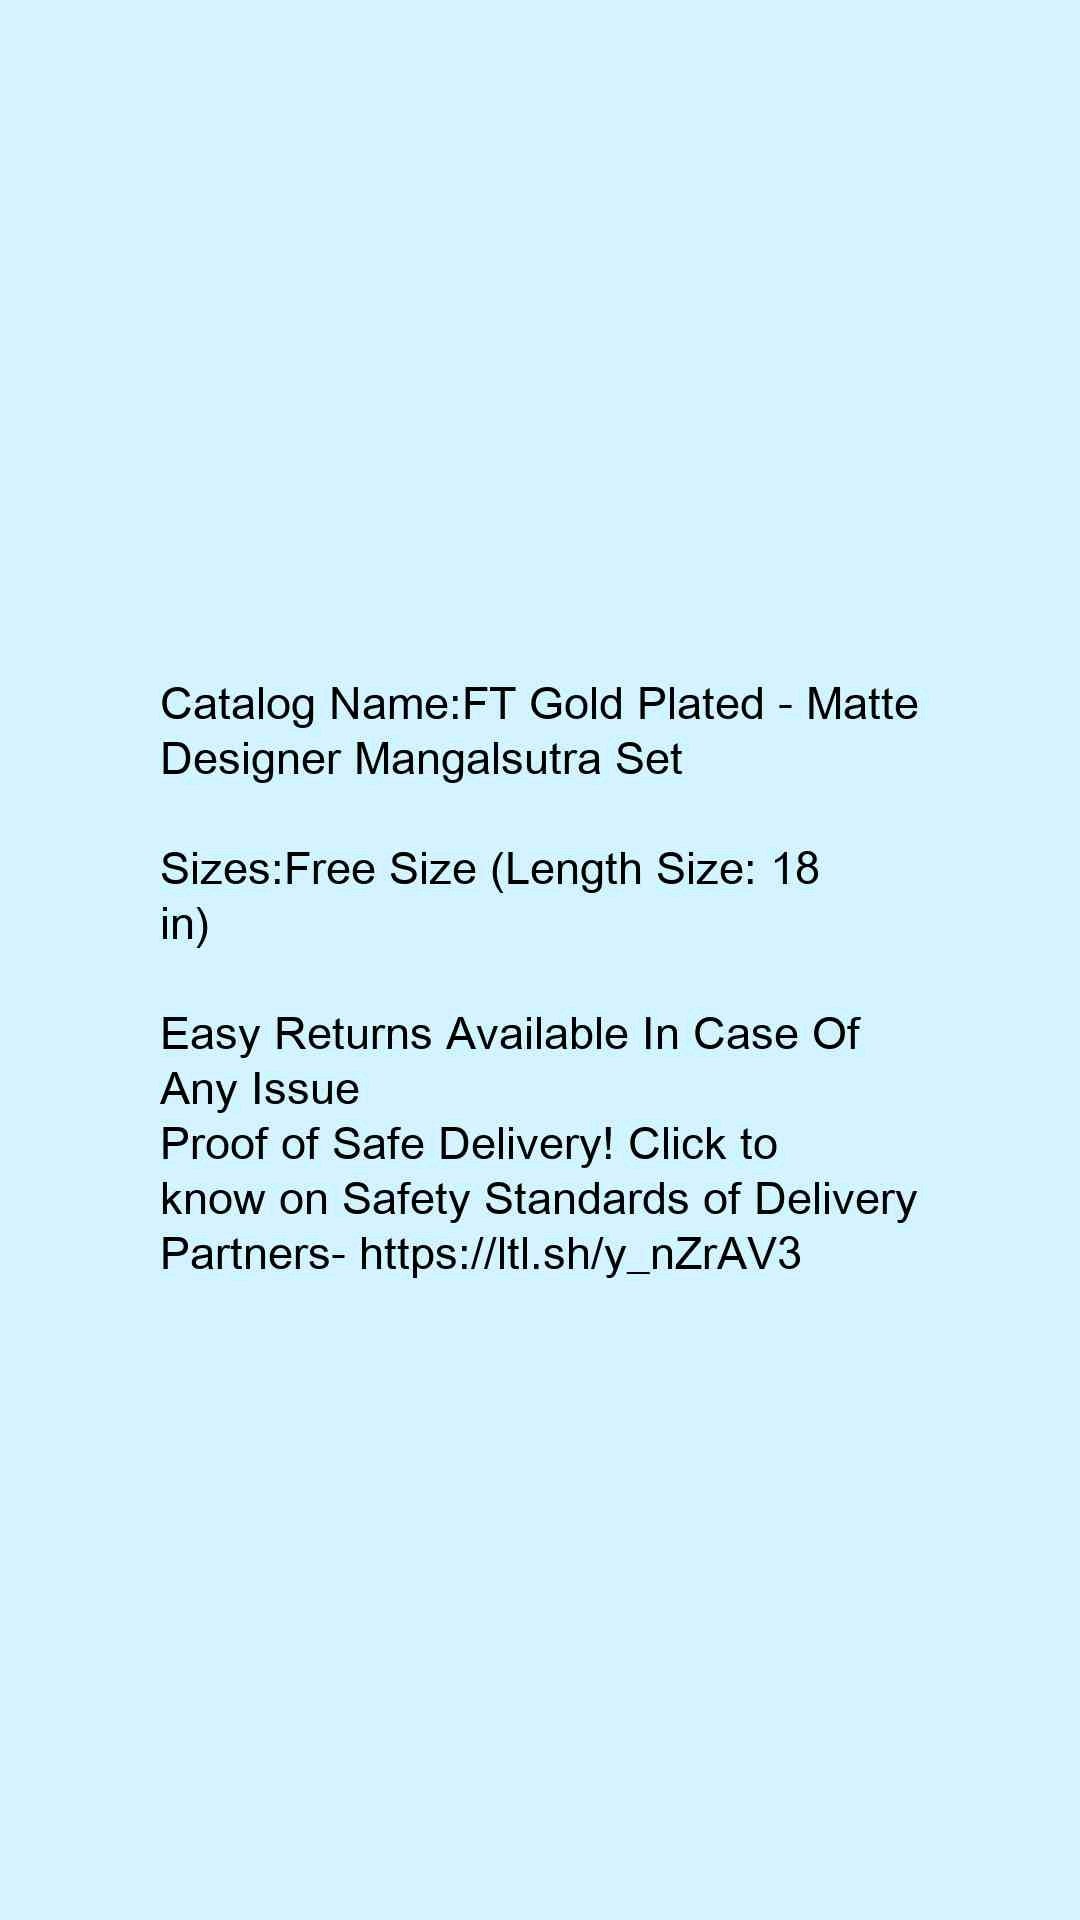 FT Gold Plated - Matte Designer Mangalsutra Set - Faritha